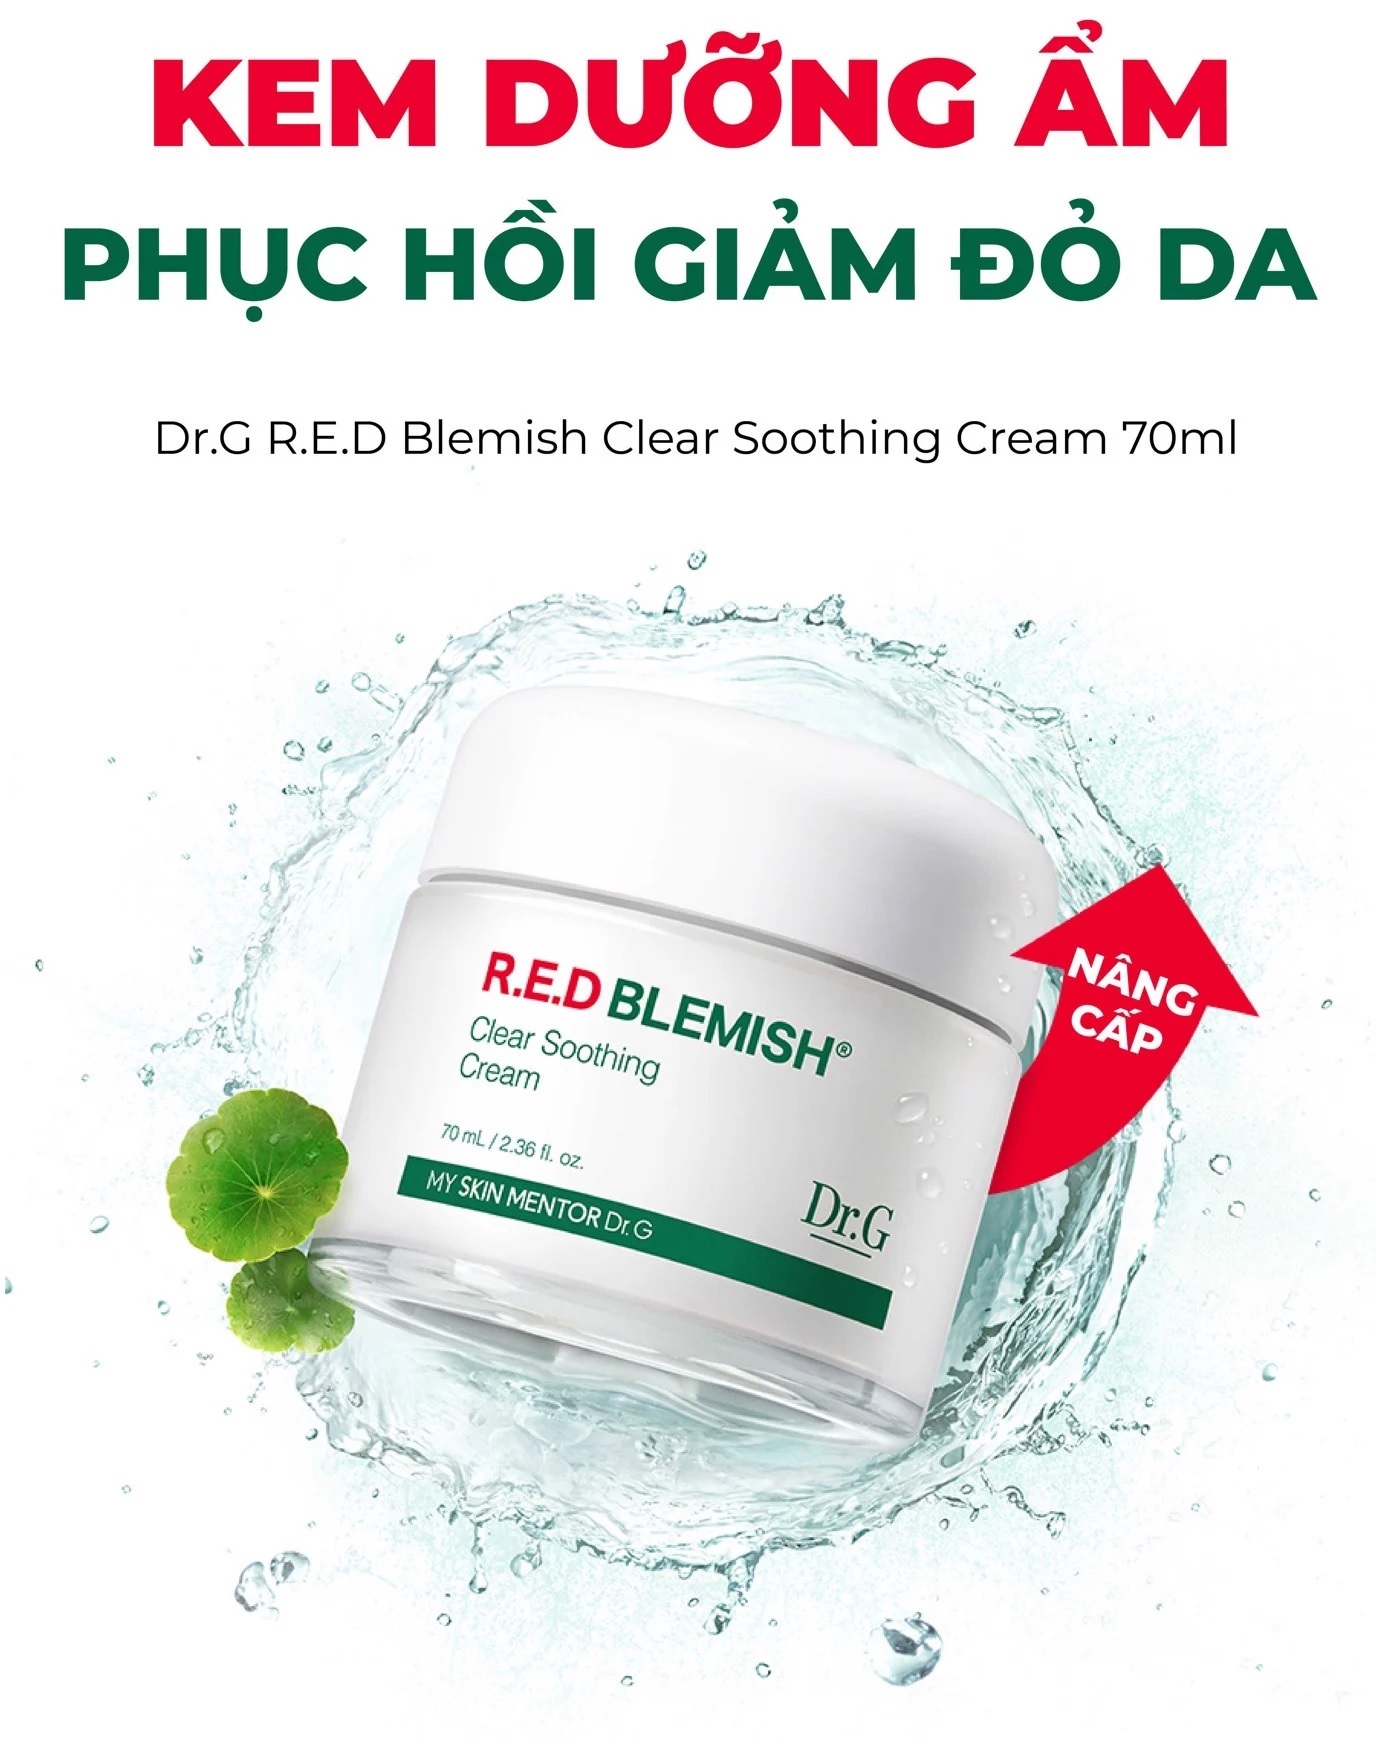 Thiết kế của Kem dưỡng Dr.G R.E.D Blemish Clear Soothing Cream